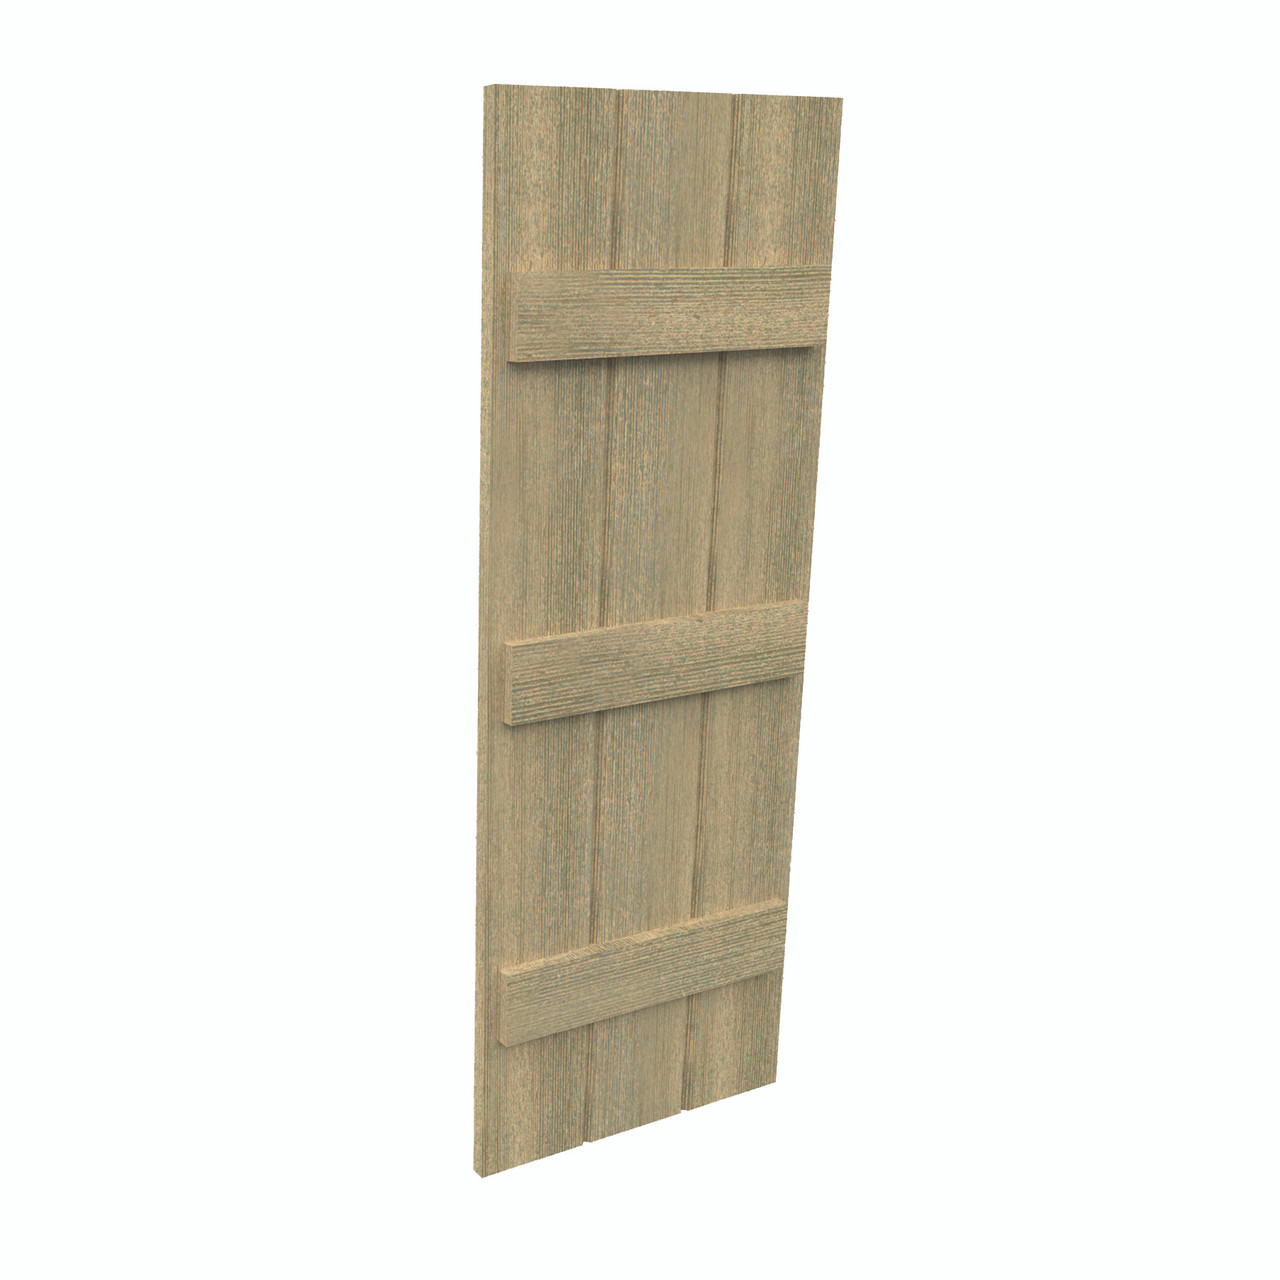 18 inch by 51 inch Plank Shutter with 3-Plank, 3-Batten